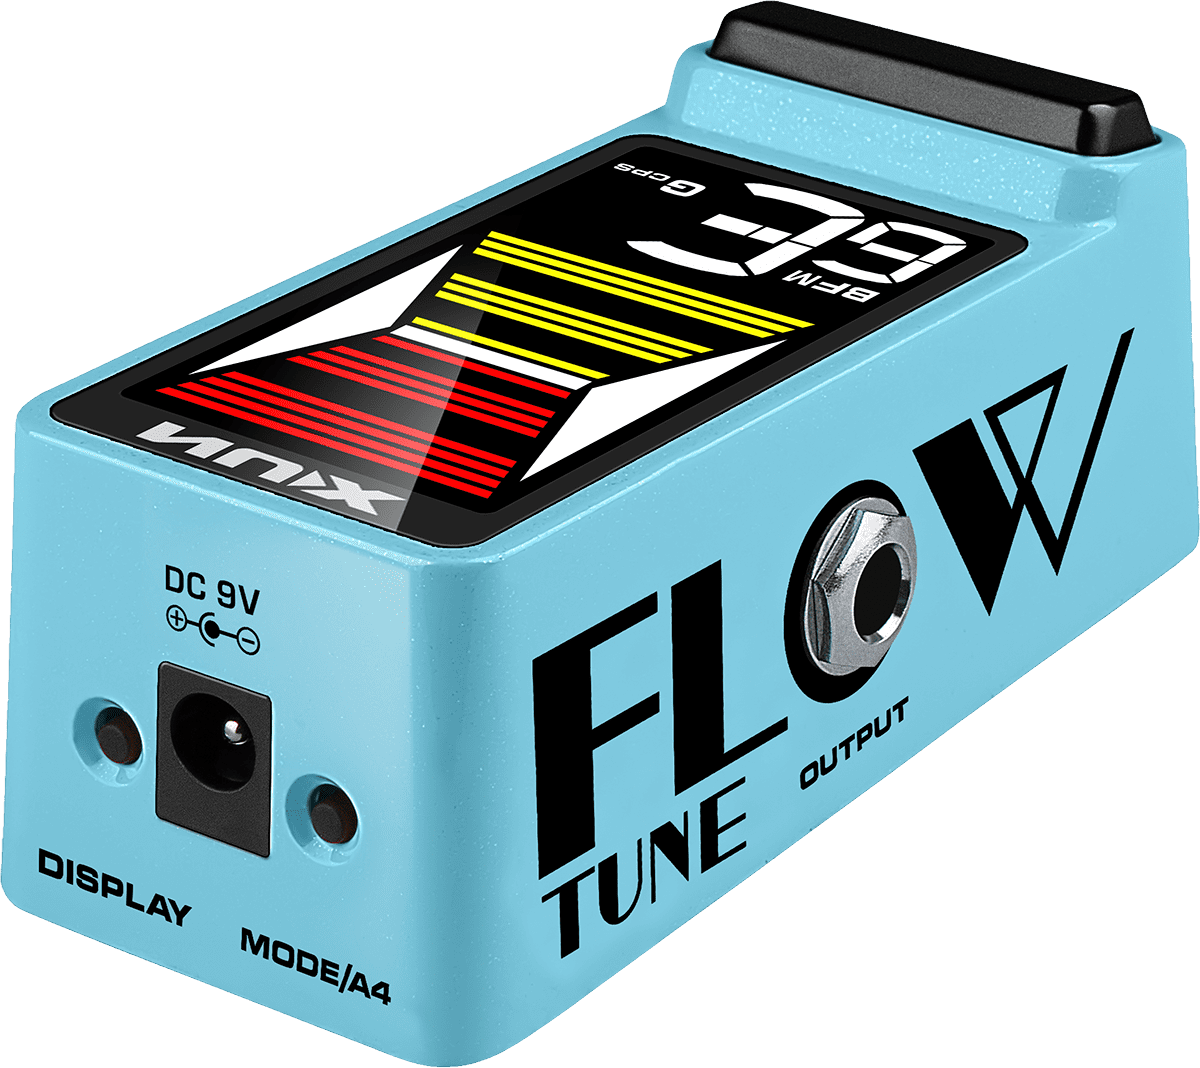 FLOWTUNE2-BLUE - Tune pedal